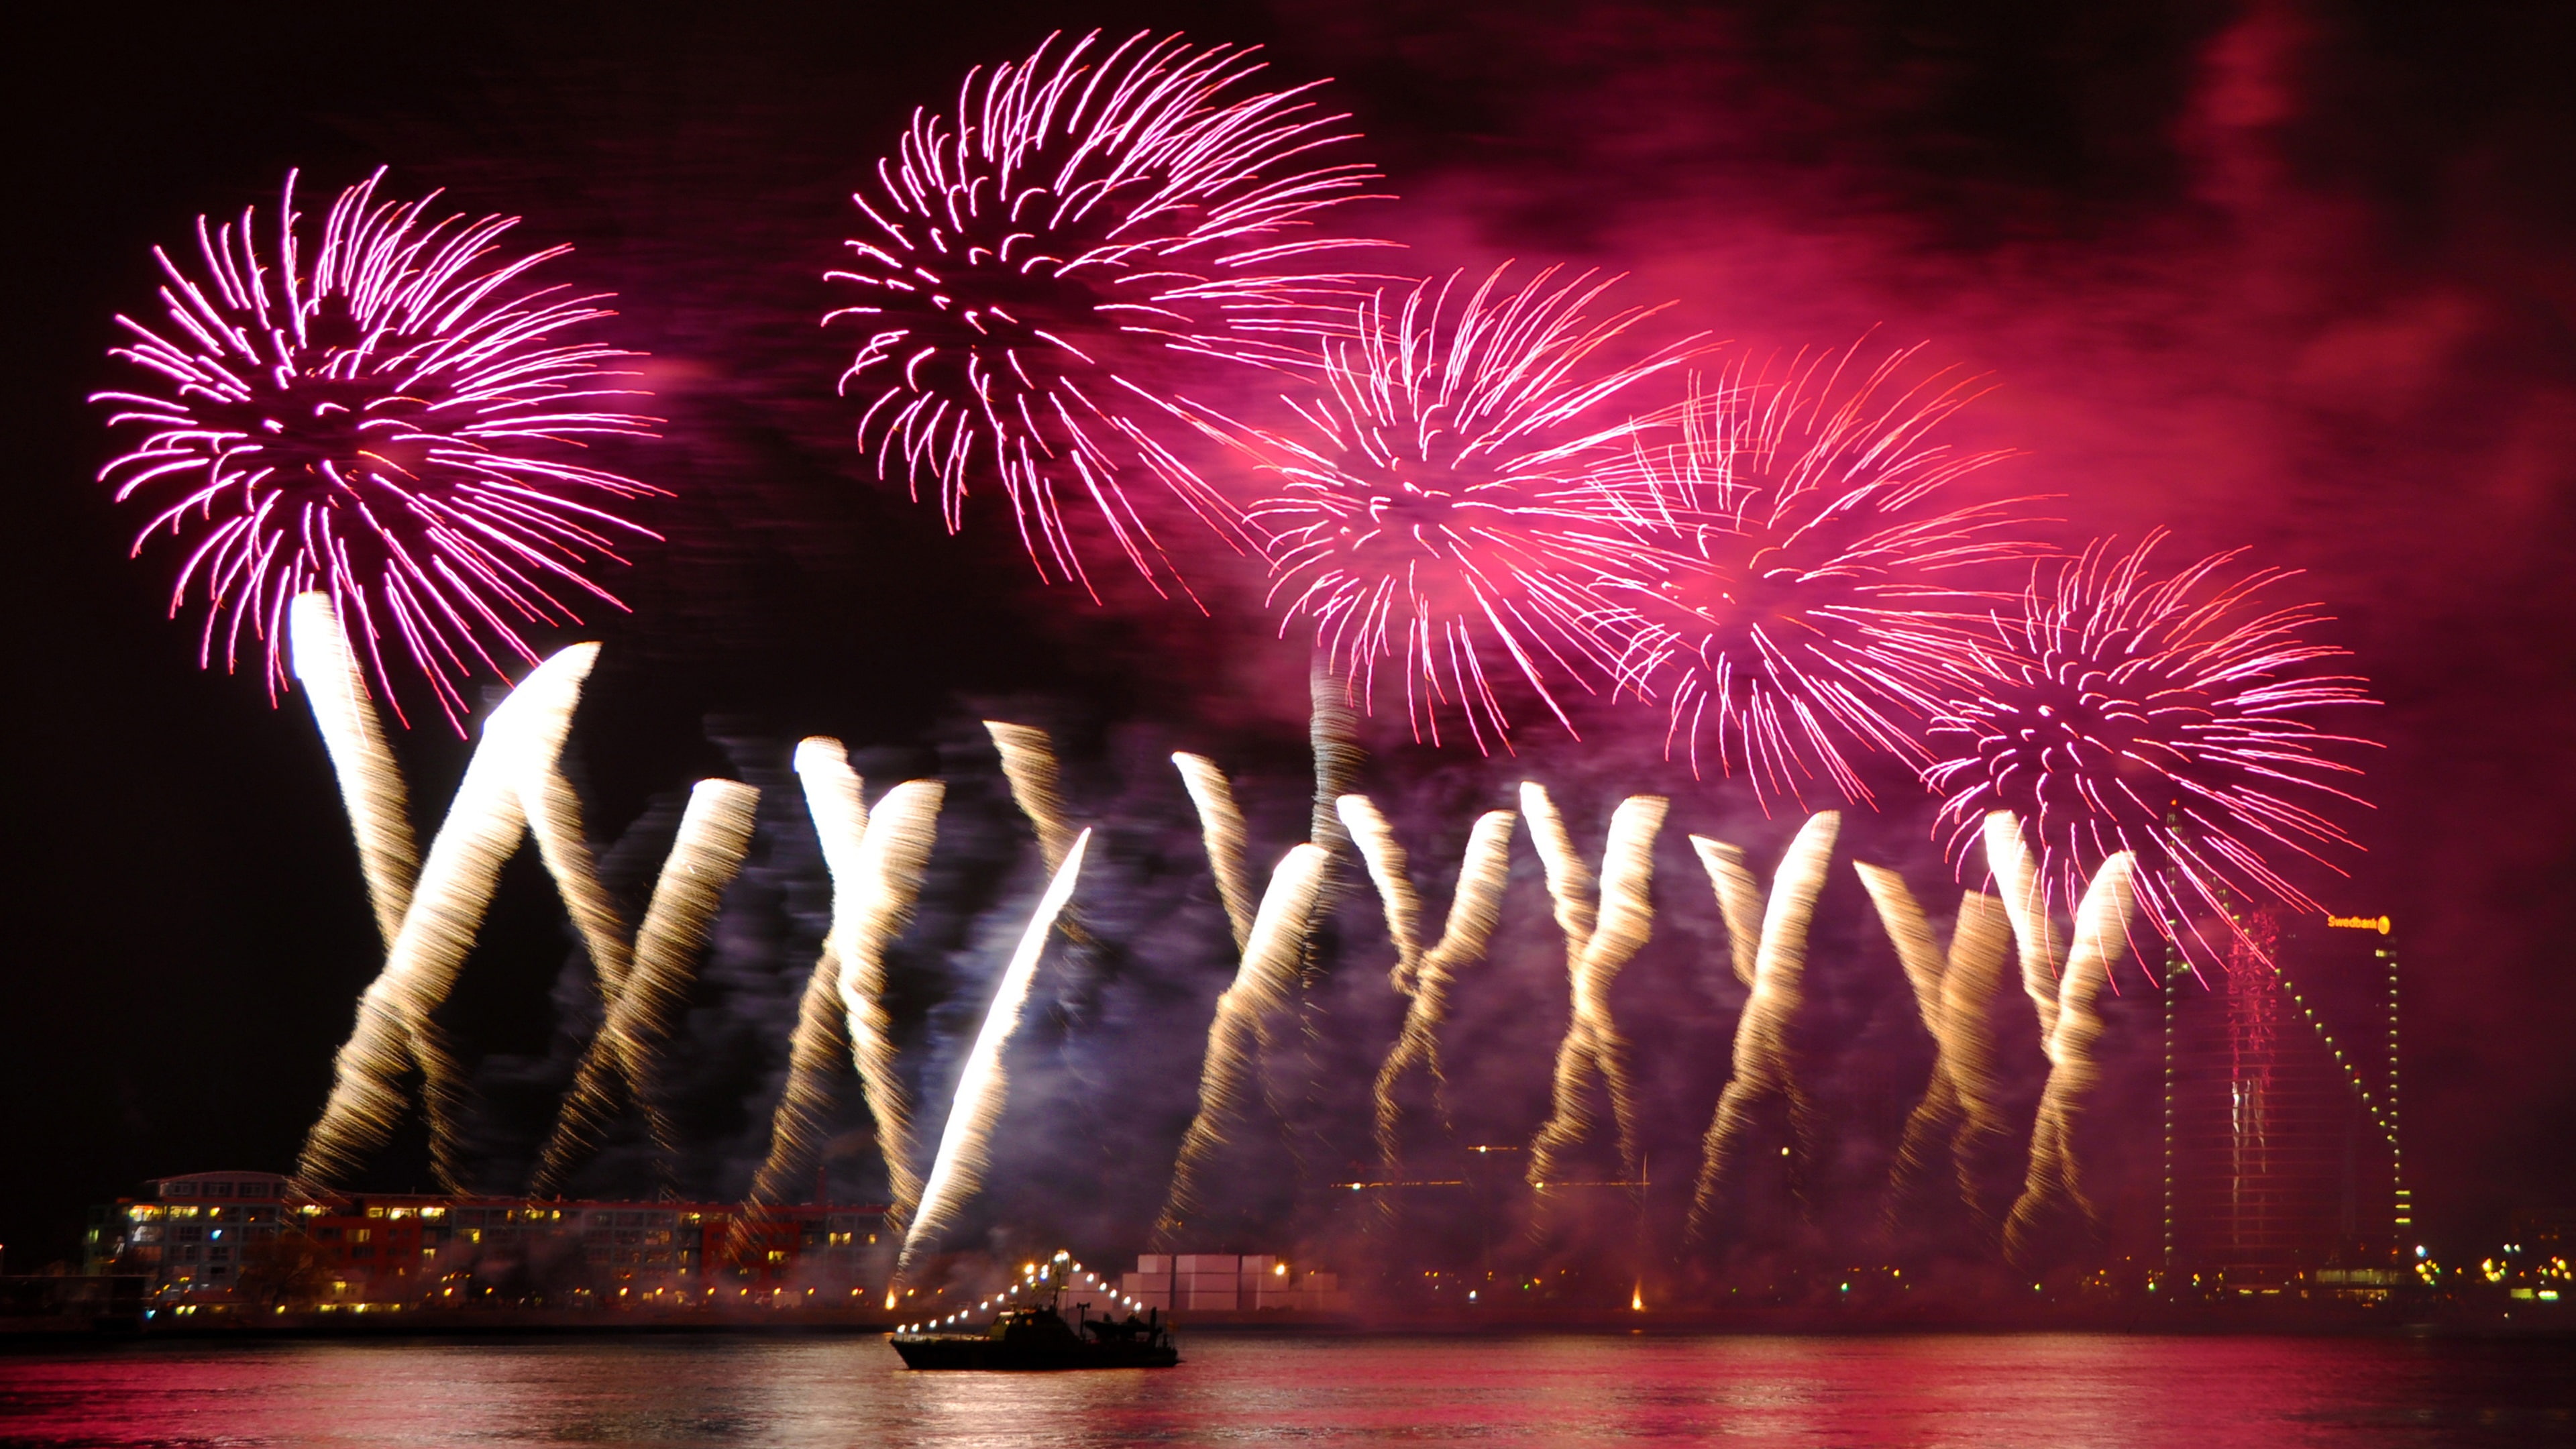 Night city sky, beautiful fireworks, river, purple and orange fireworks display